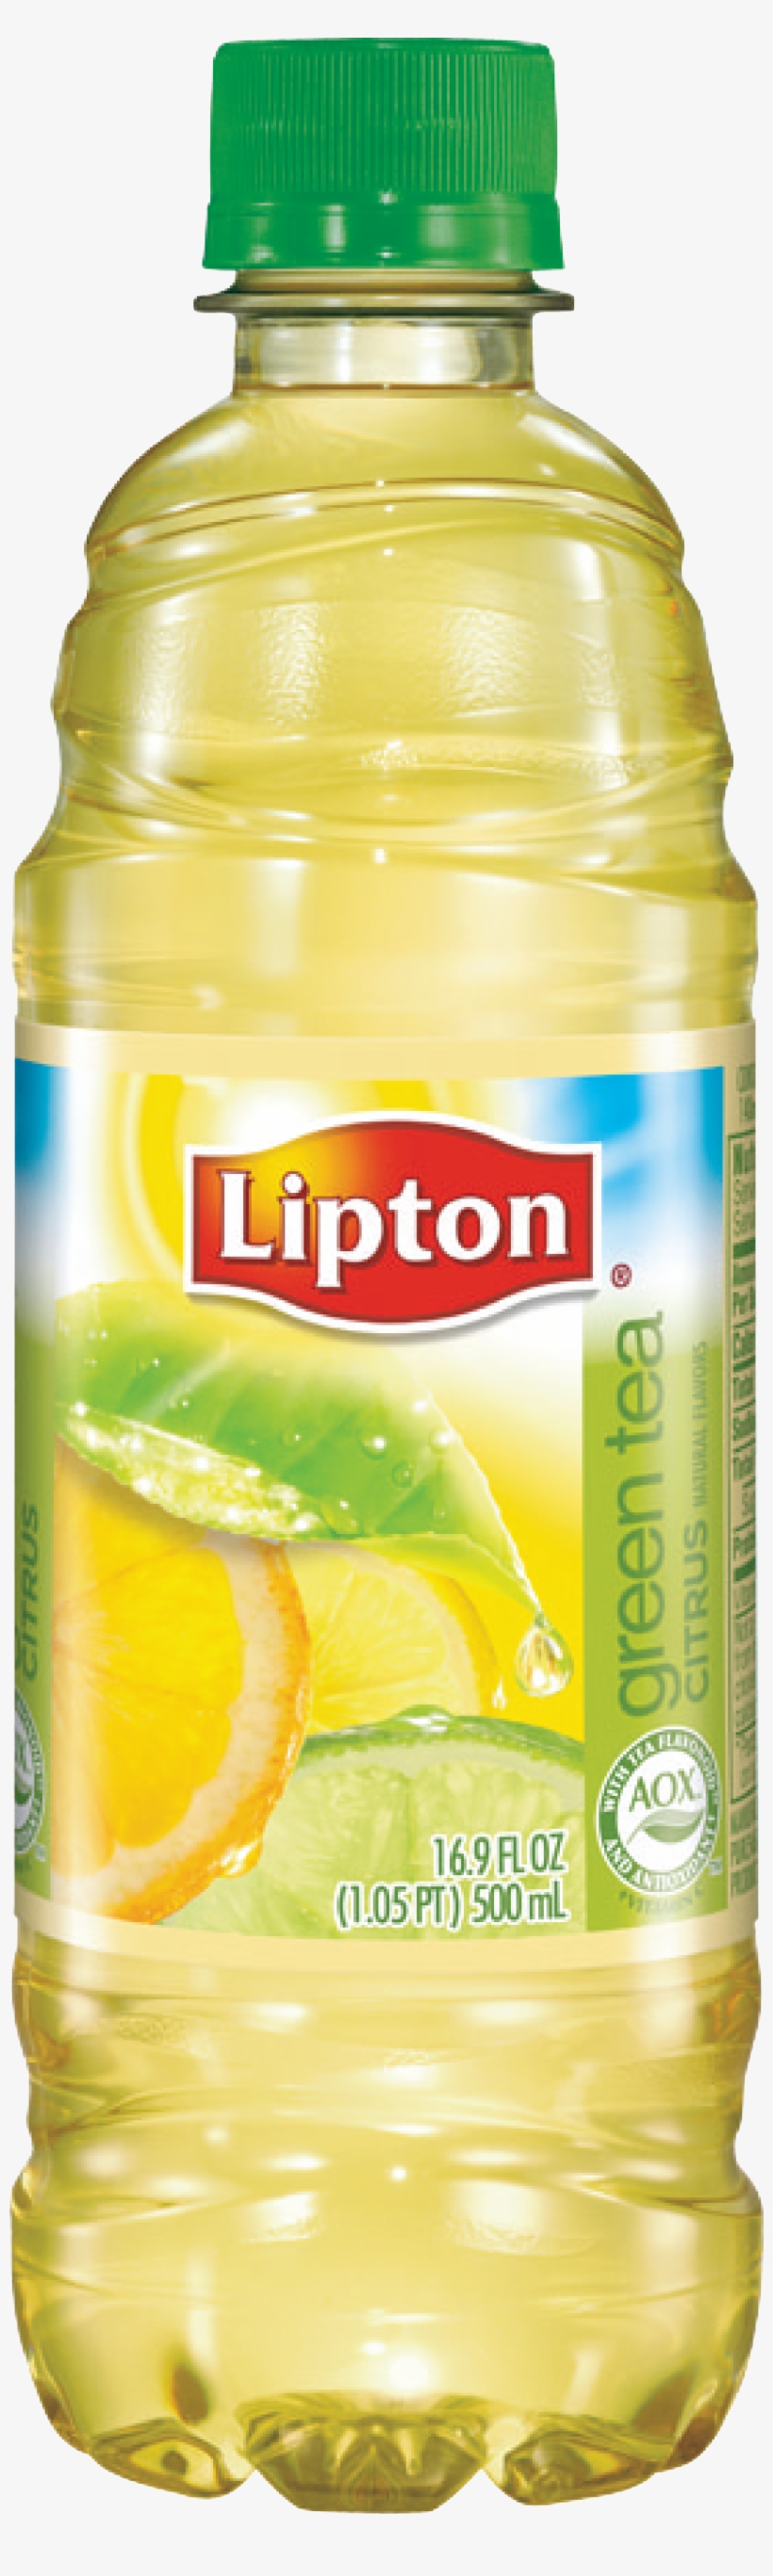 Lipton Green Tea Citrus - Lipton Ice Tea Diet, transparent png #4320500